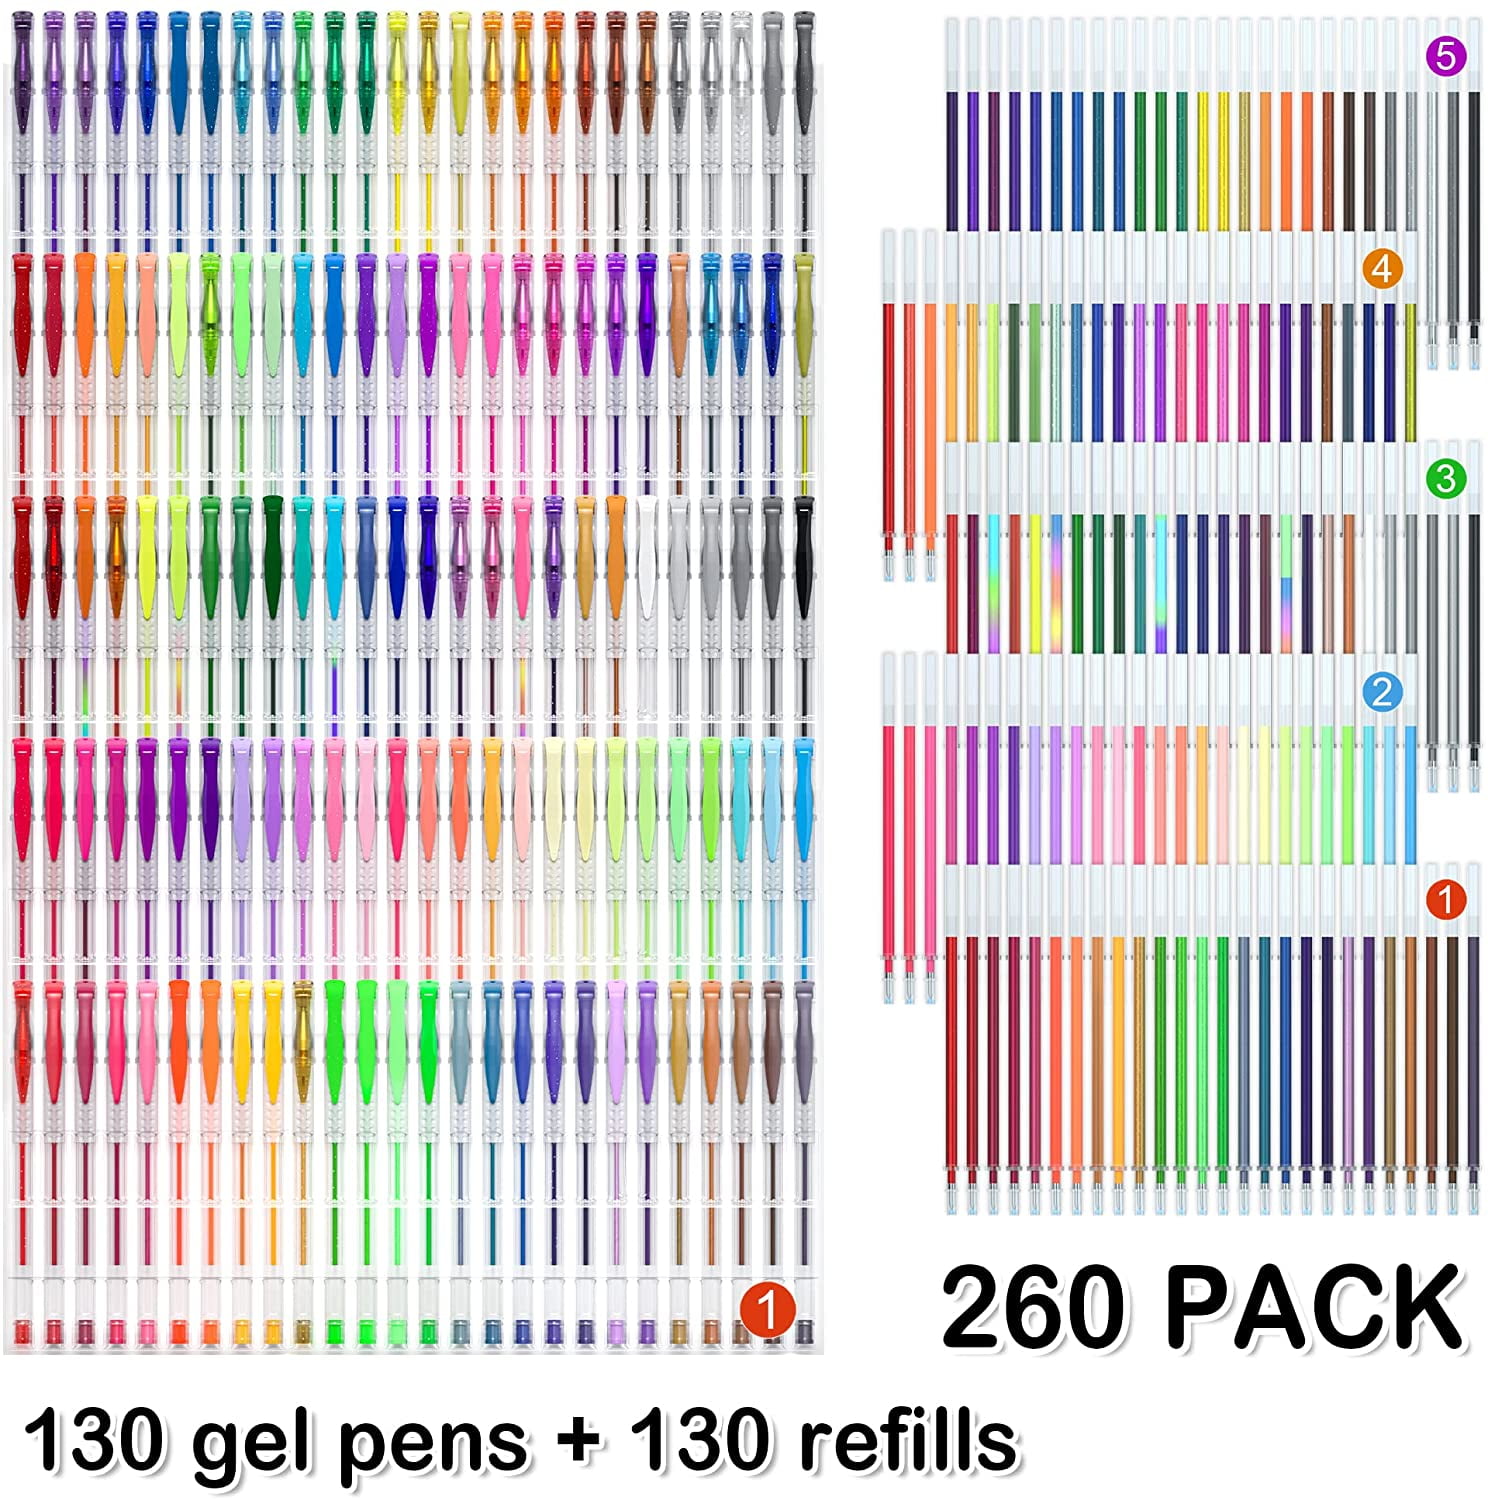 Gel Pens, Shuttle Art 130 Colors Gel Pen with 1 Coloring Book in